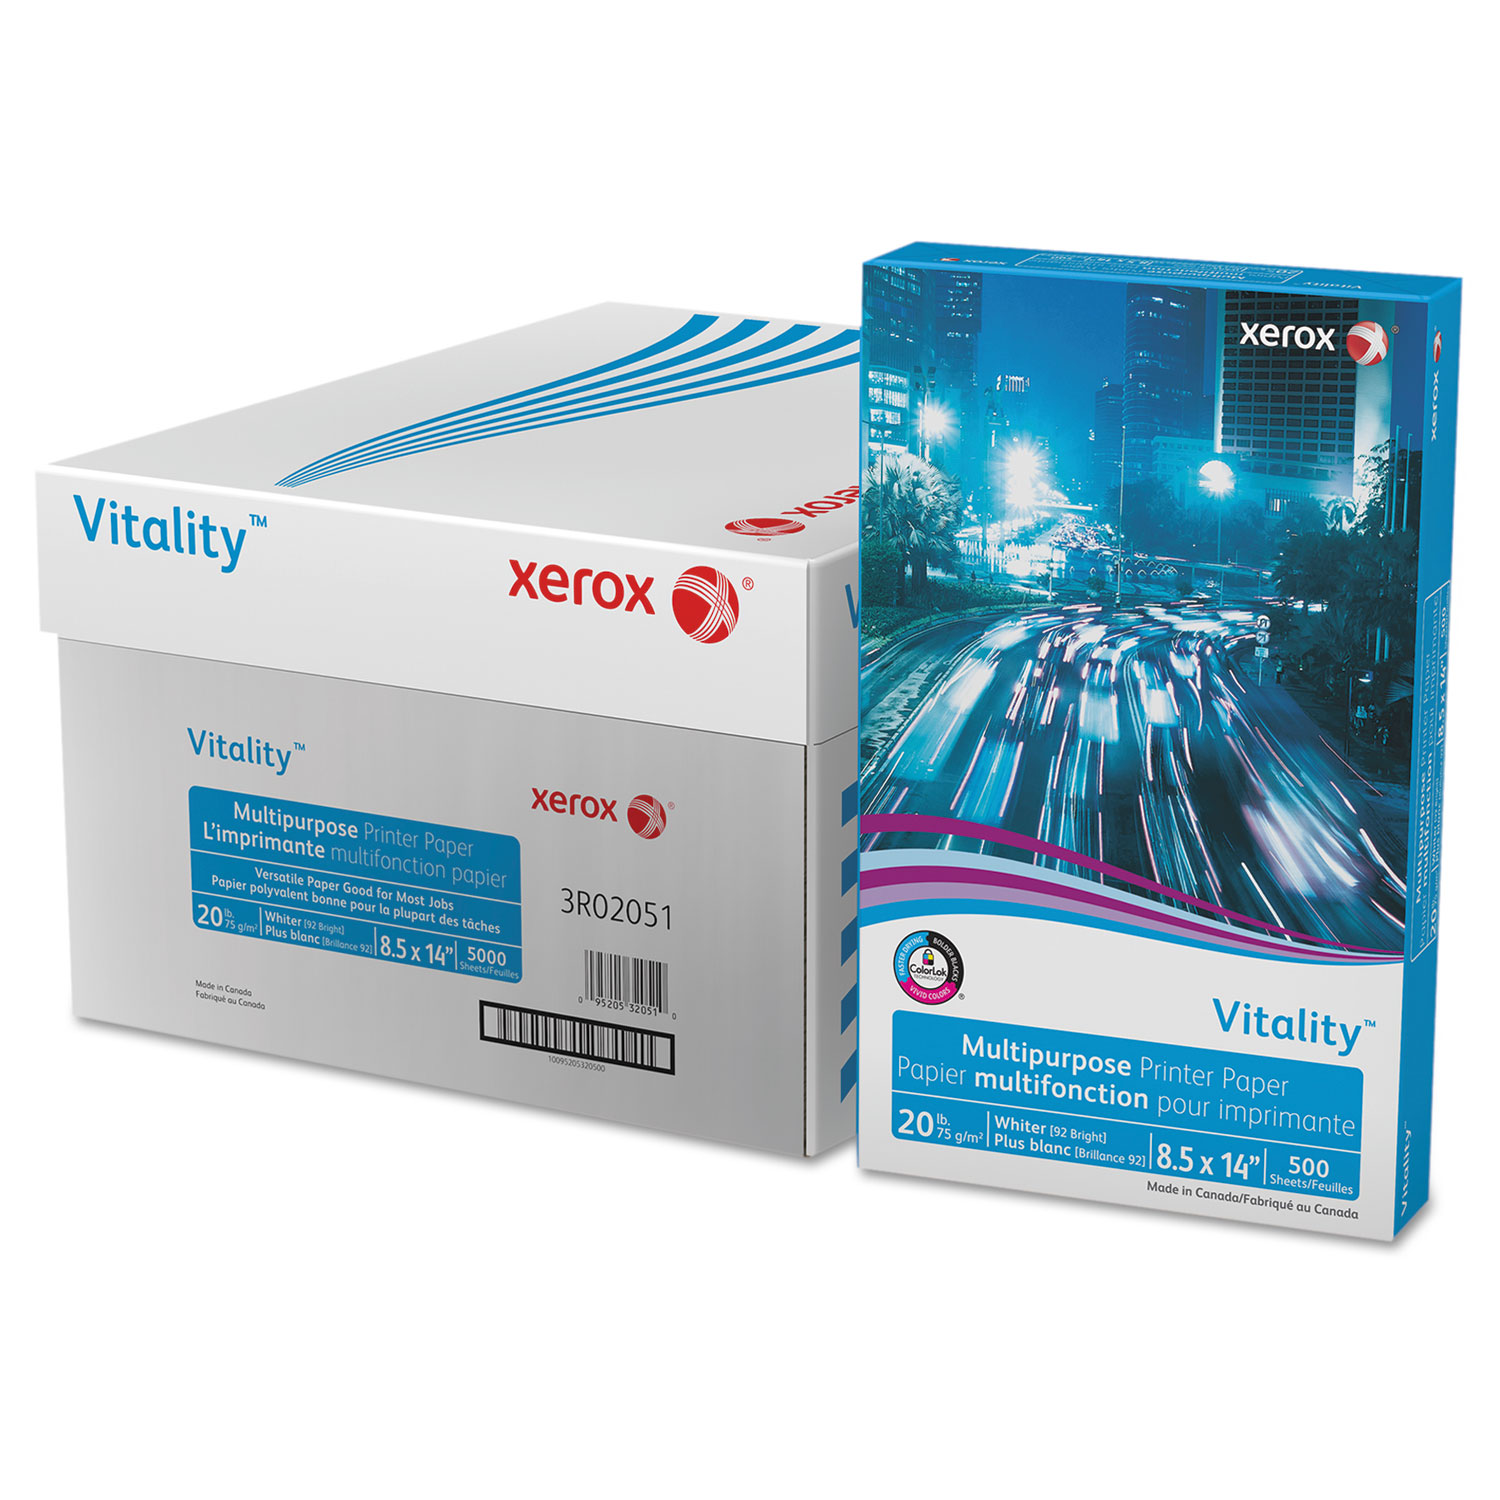  xerox 3R02051CT Vitality Multipurpose Print Paper, 92 Bright, 20lb, 8.5 x 14, White, 500 Sheets/Ream, 10 Reams/Carton (XER3R02051CT) 